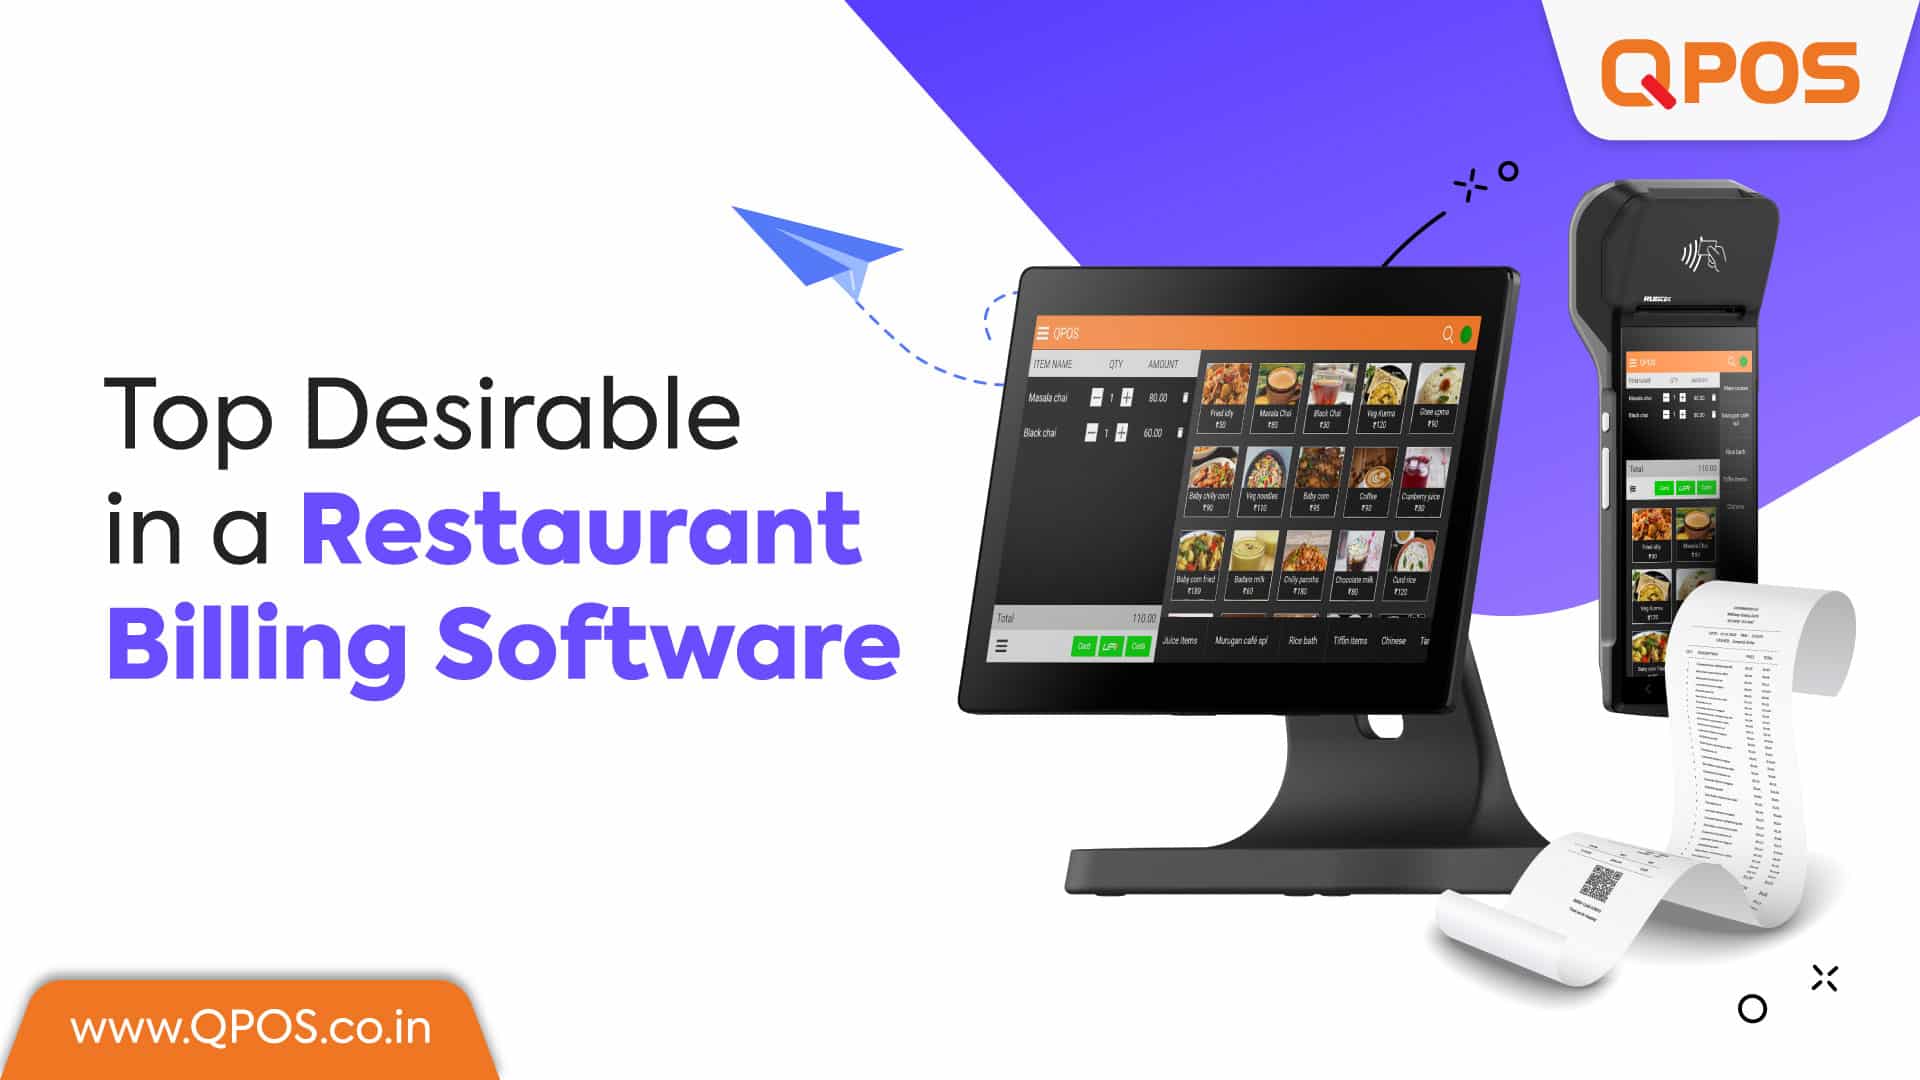 QPOS-Top 6 Desirables in a Restaurant Billing Software